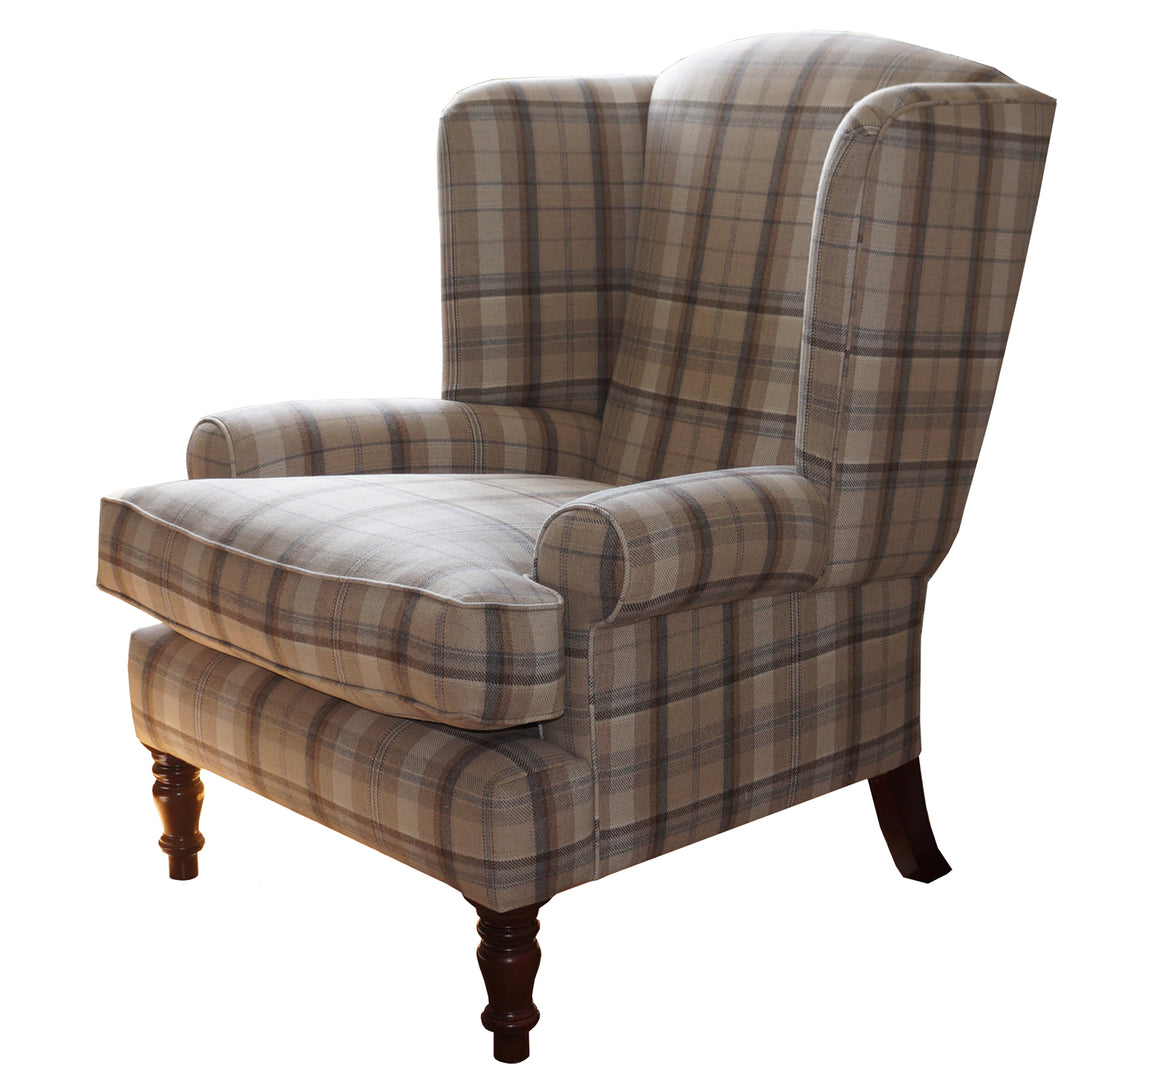 Jodphur Wing Chair in Smythson HALF PRICE TO ORDER